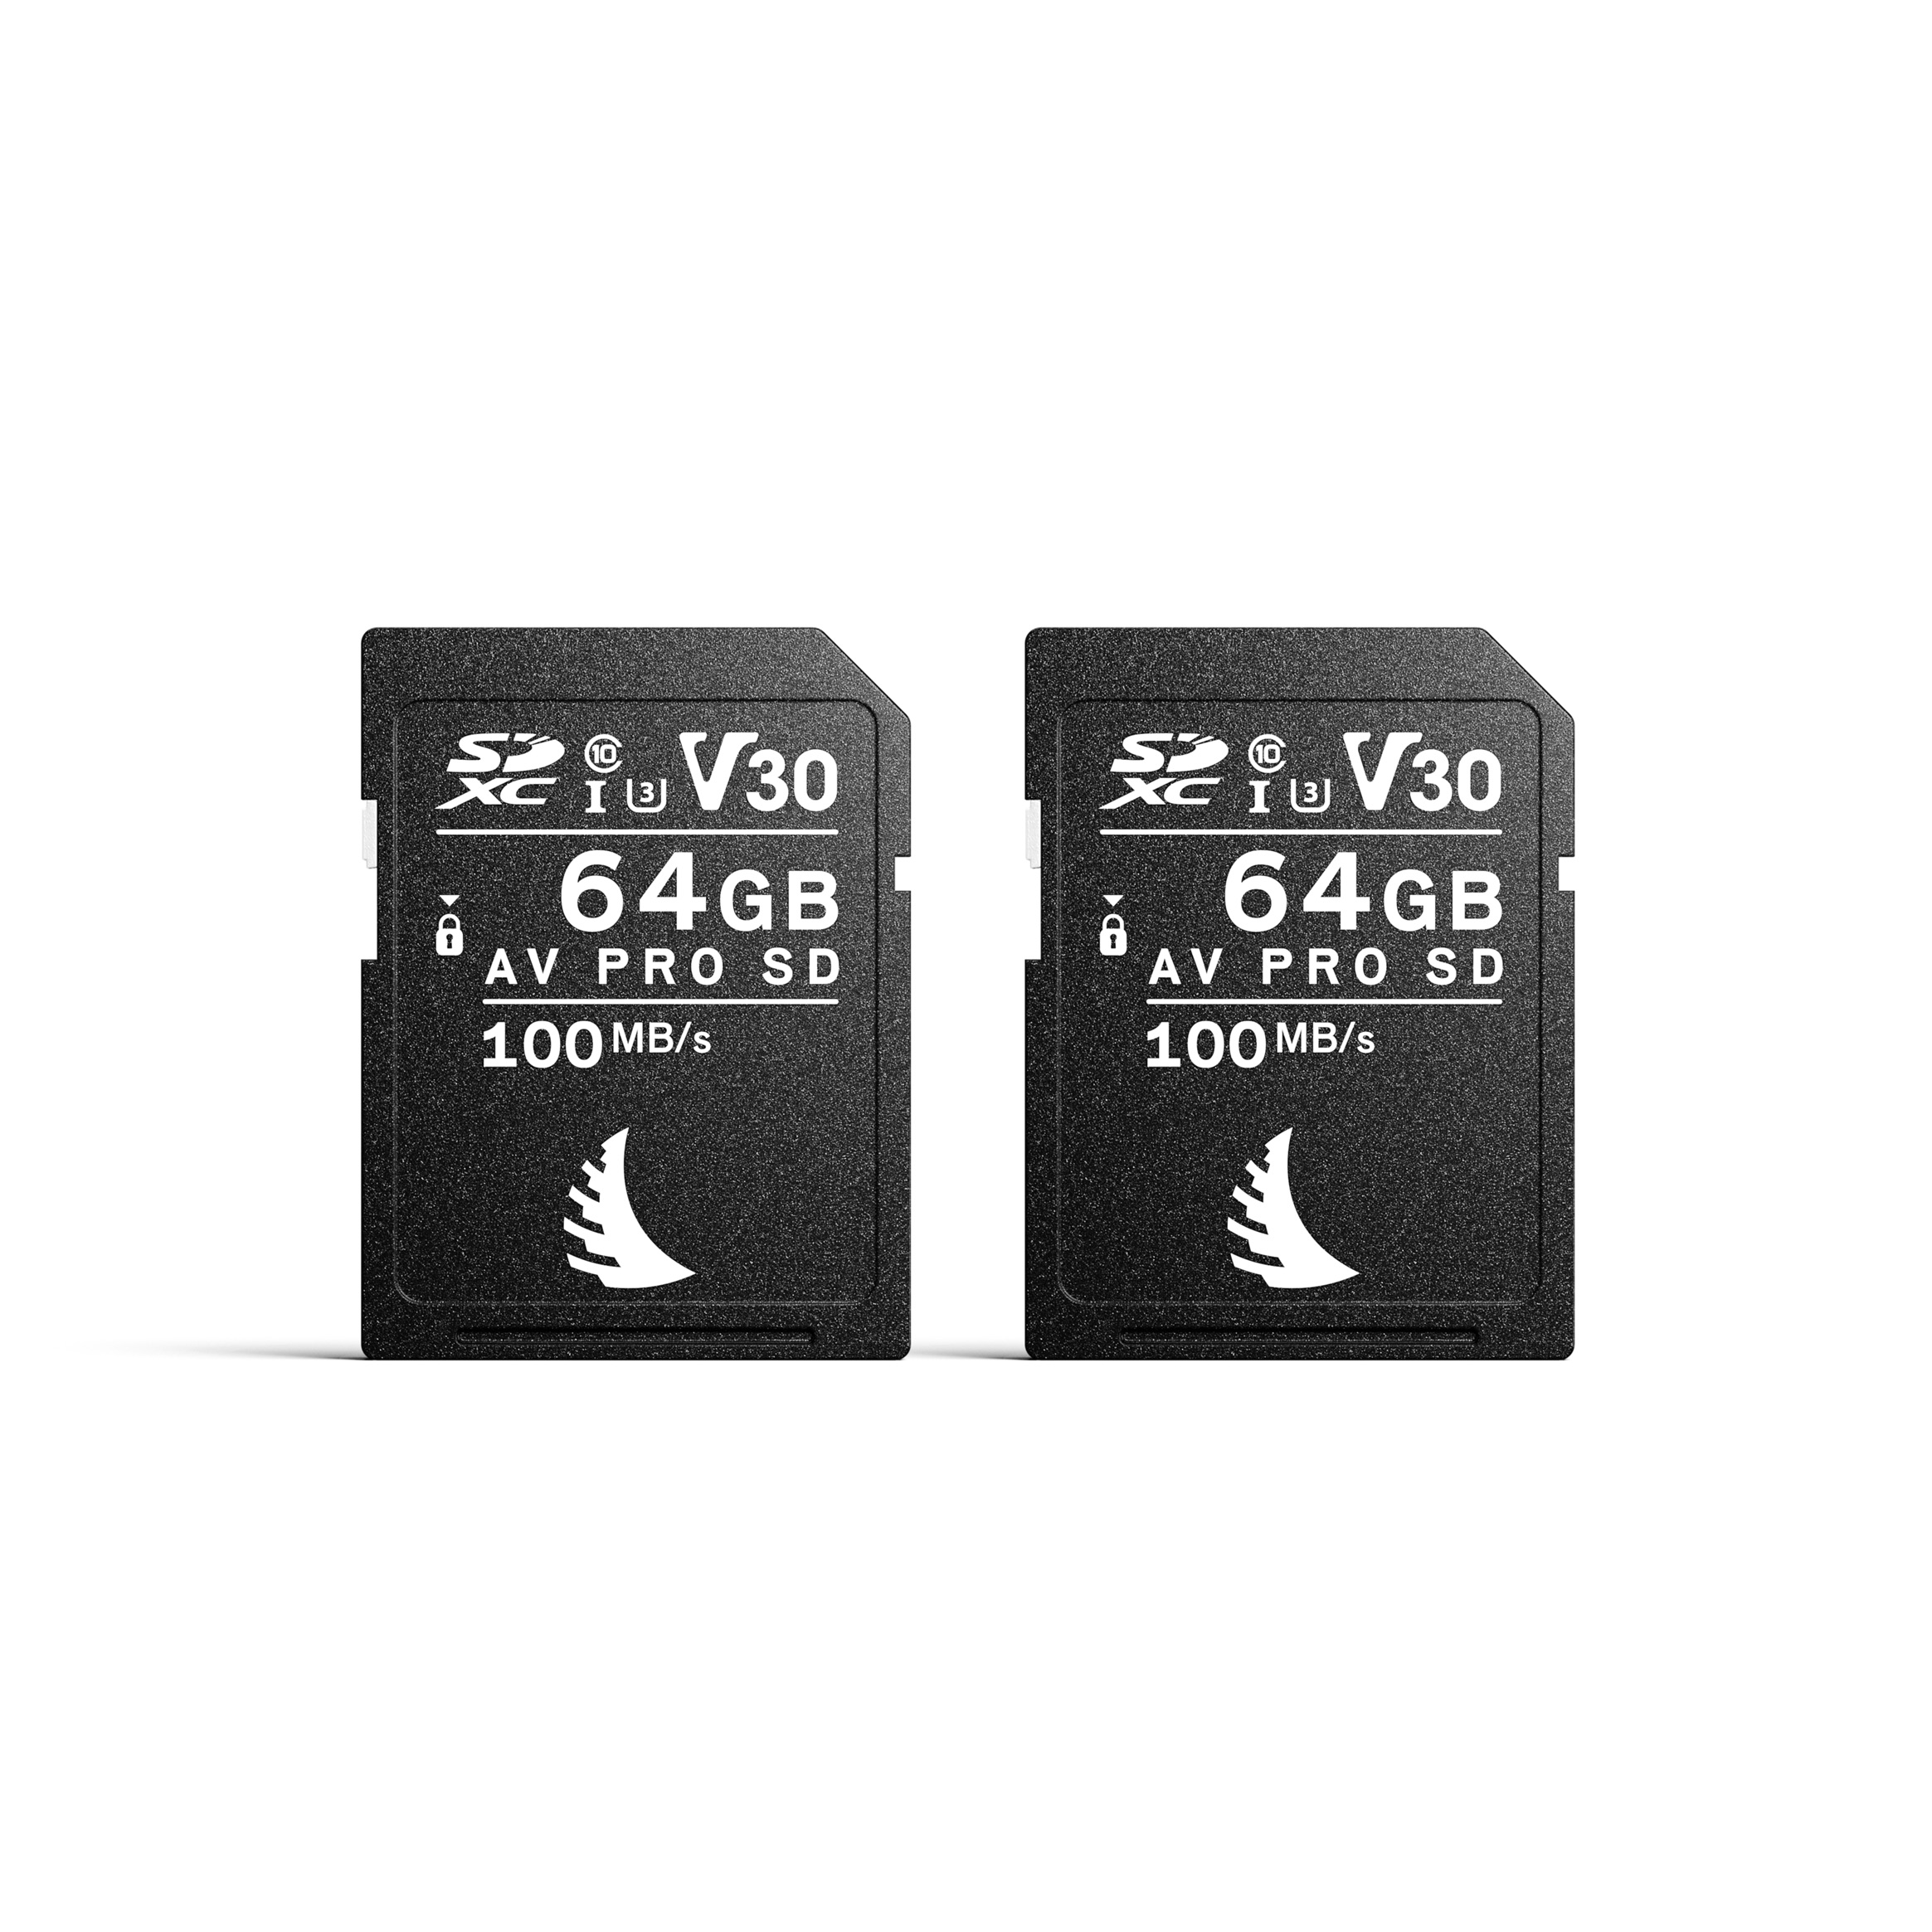 Angelbird Match Pack Fujifilm mit 2 AV PRO SD V30 64GB Speicherkarten, Frontalansicht